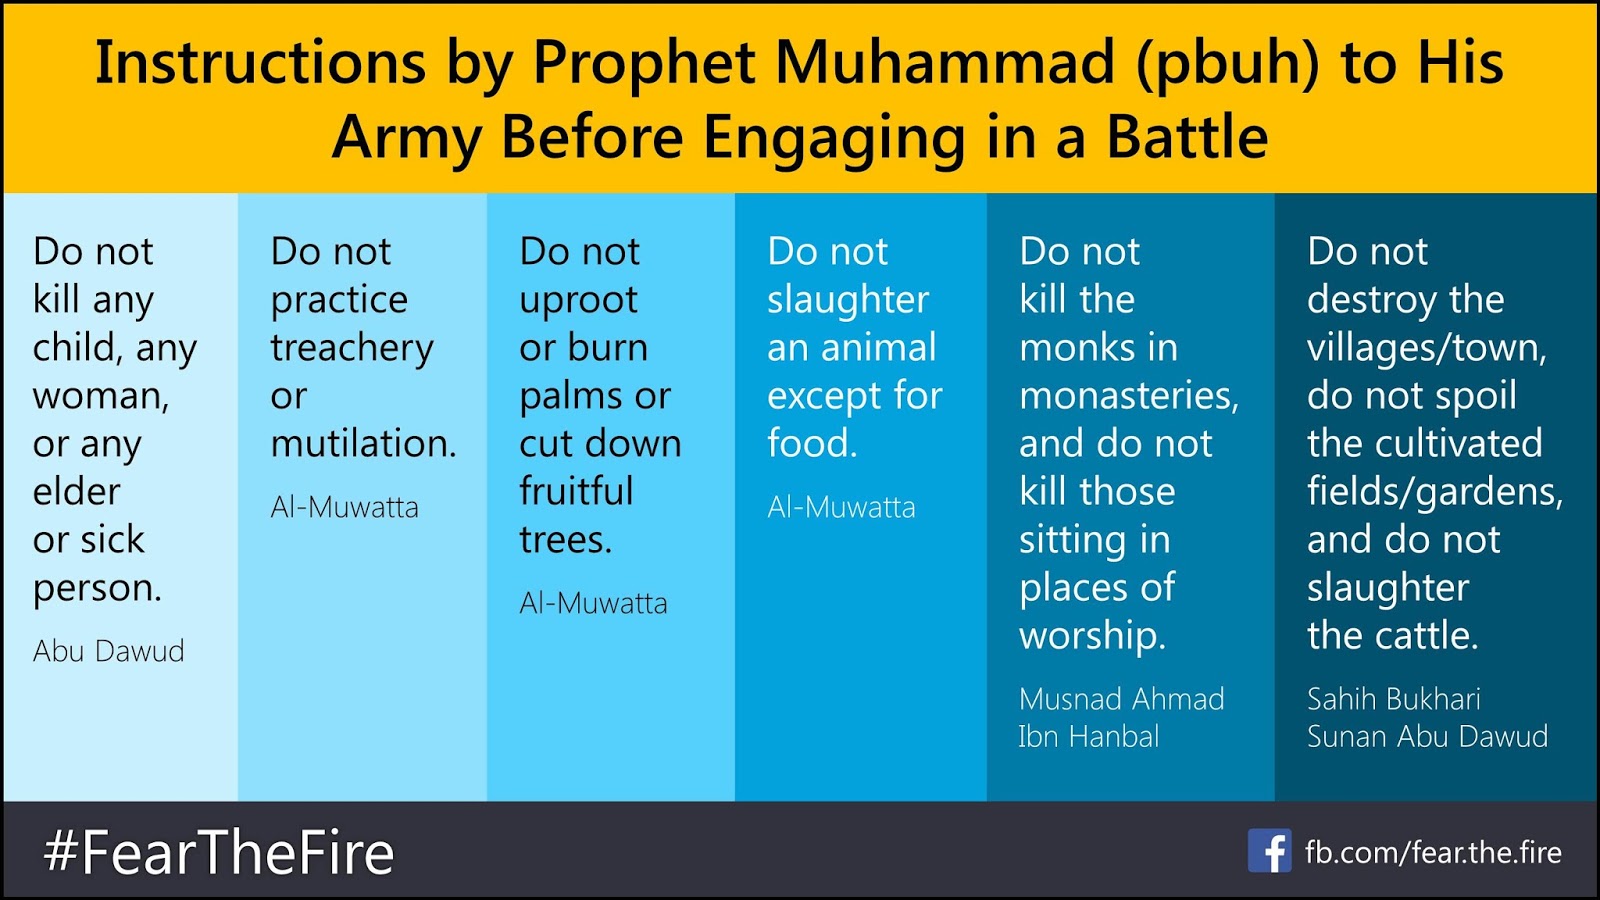 ebcf6battle2brules2bby2bprophet2bmuhamme 1 - A look into wars of Prophet Muhammad